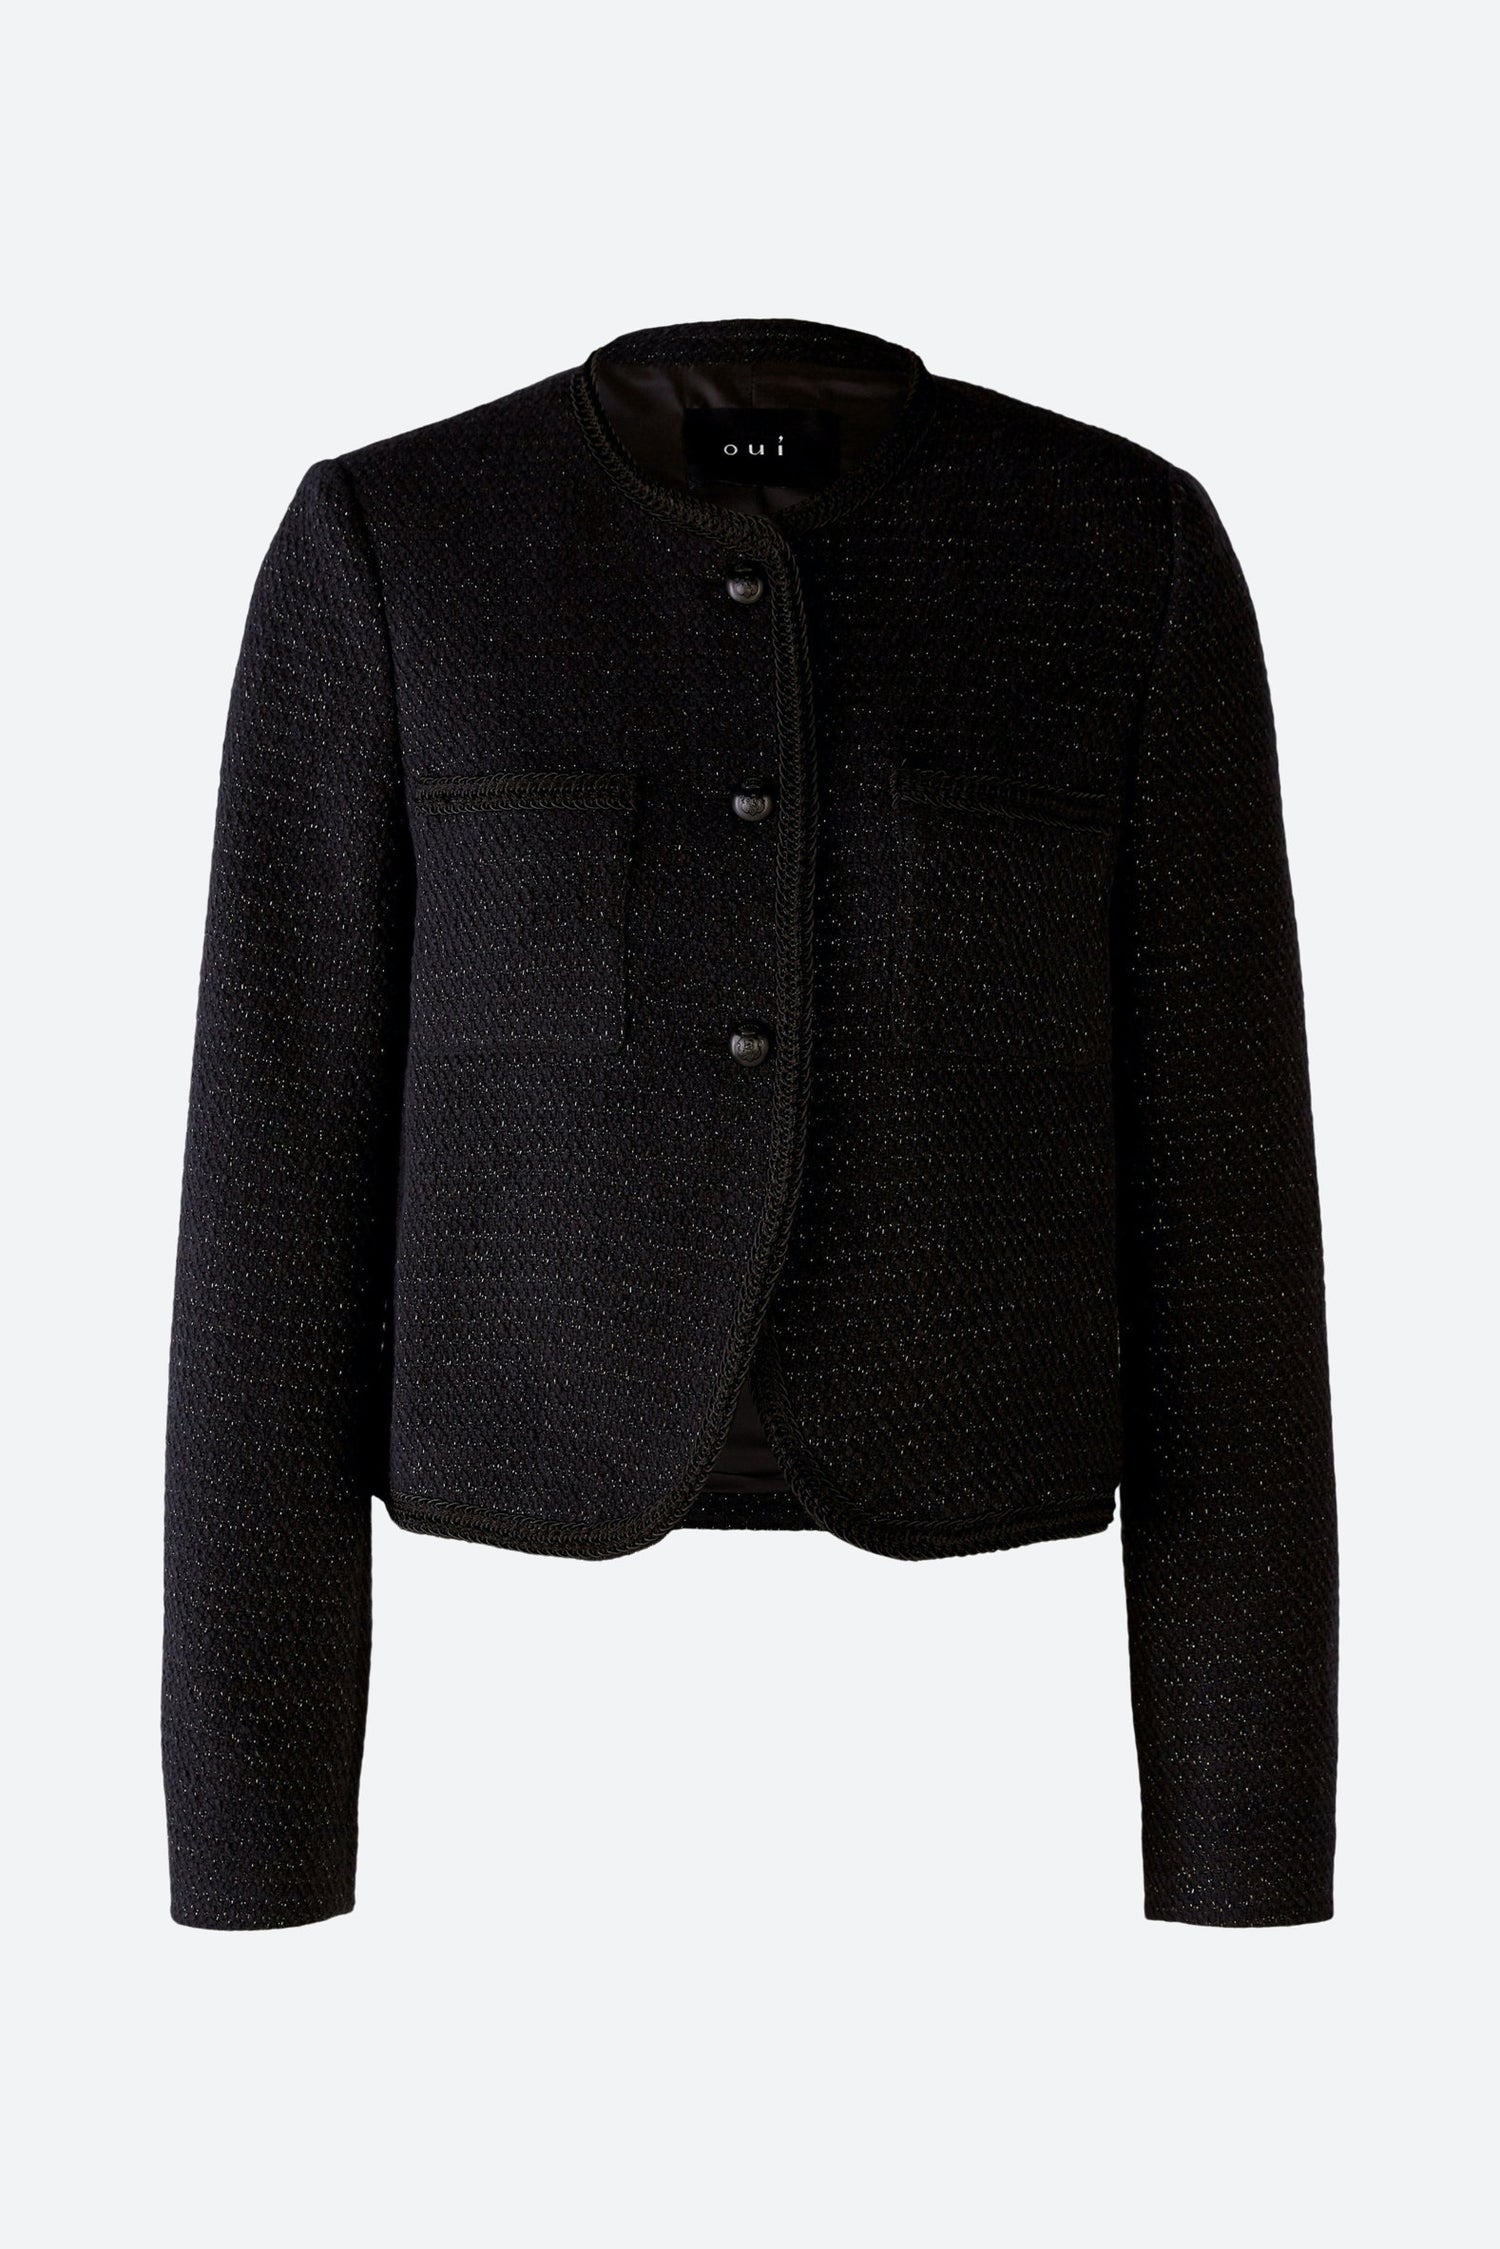 Jacket Cotton Blend With Shiny Yarn_79668_9990_01